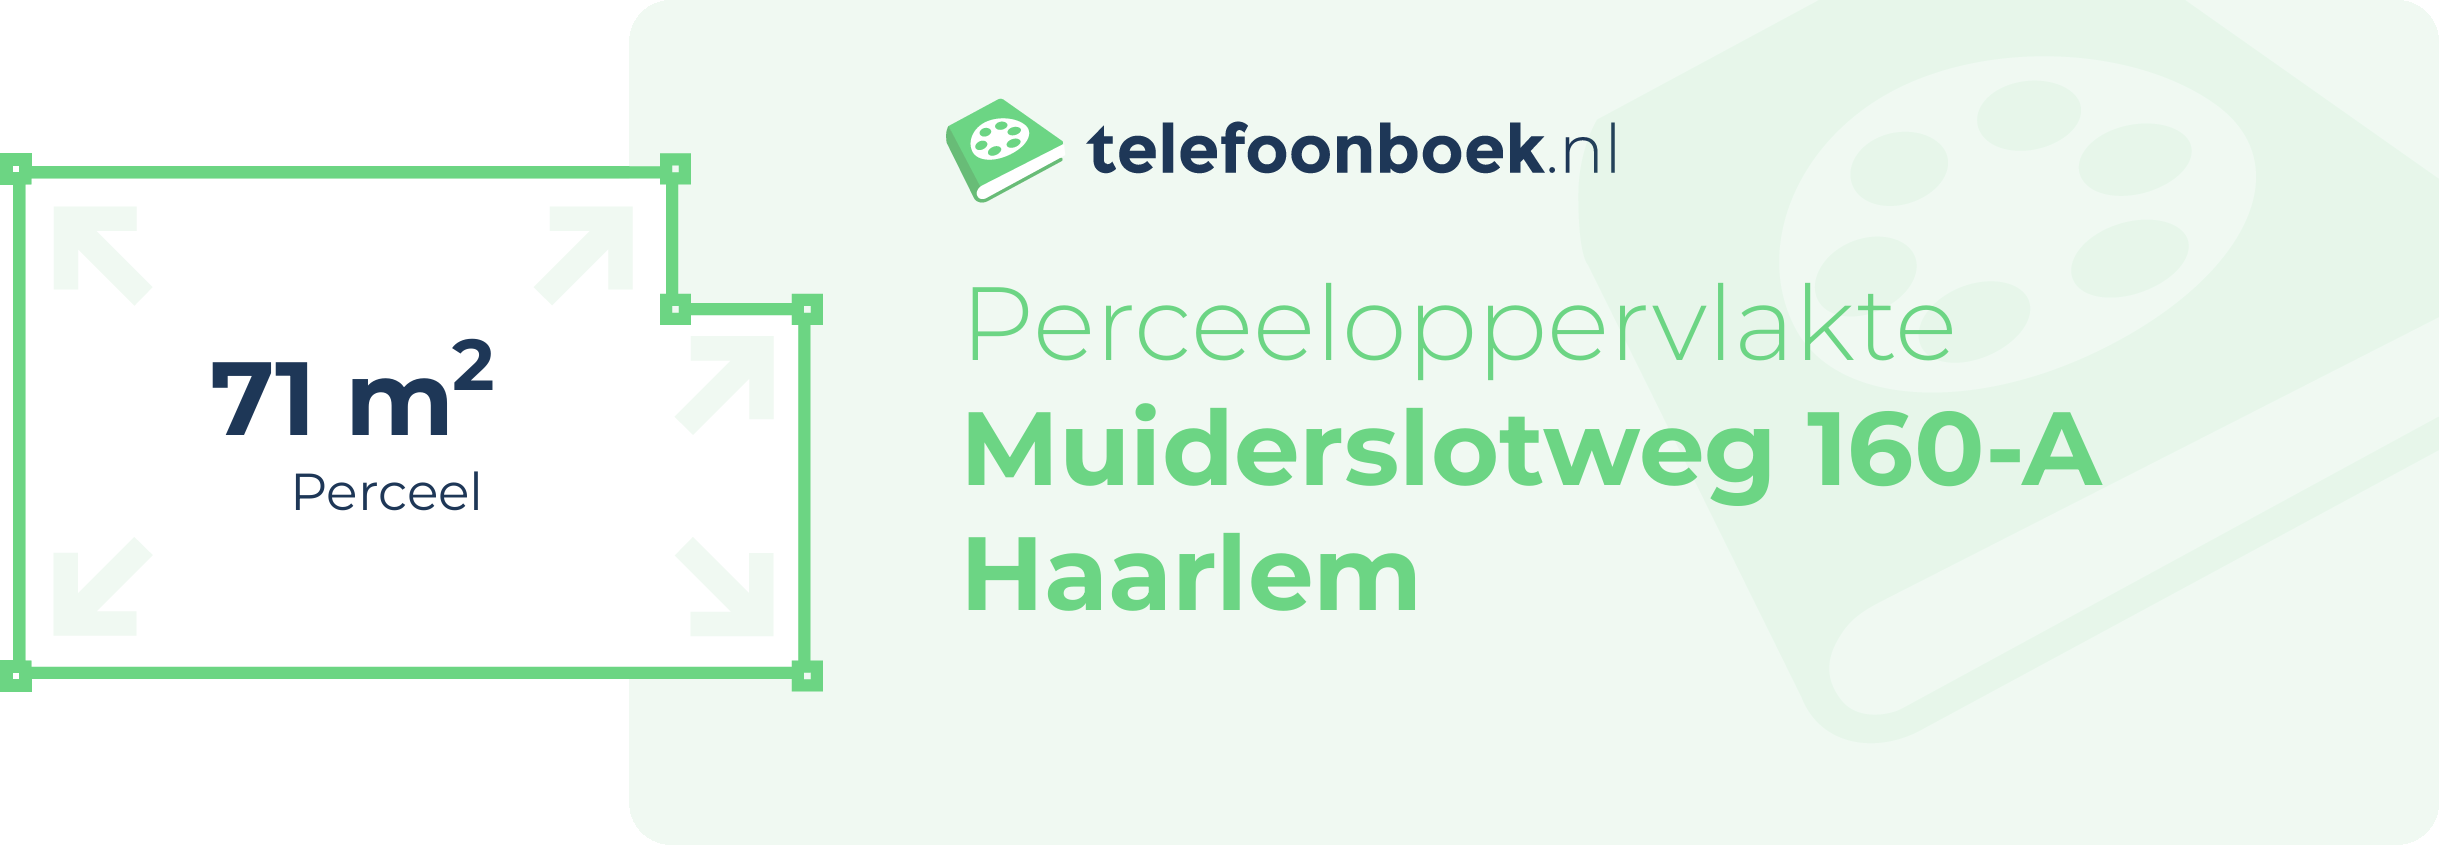 Perceeloppervlakte Muiderslotweg 160-A Haarlem